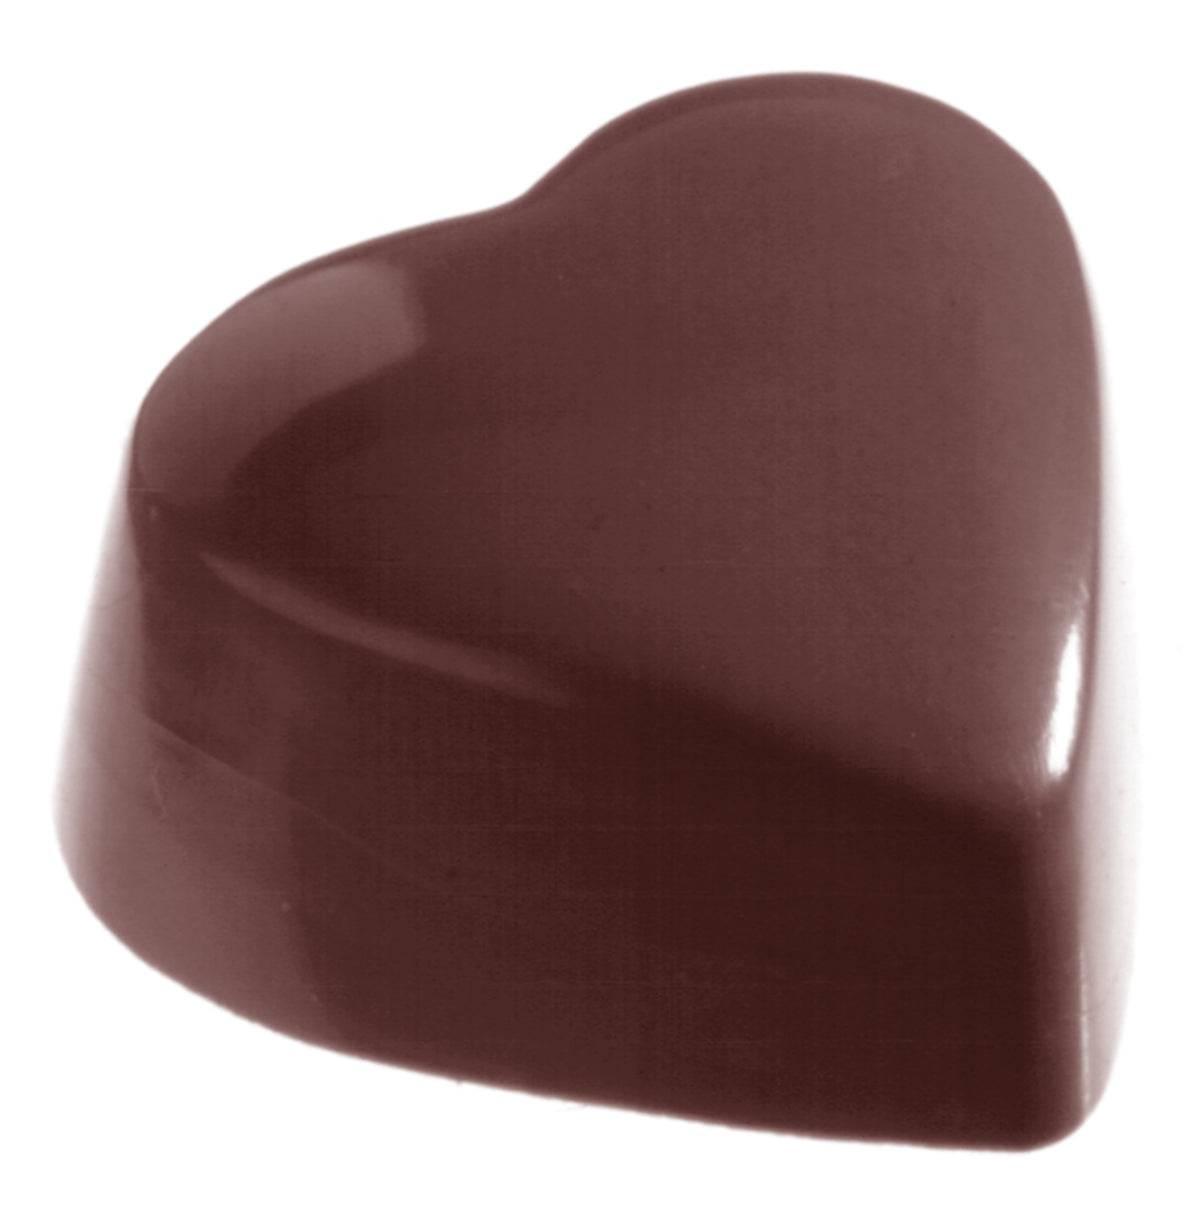 CHOCOLATE MOULD HEART HIGH FLAT CW1214 - Zucchero Canada